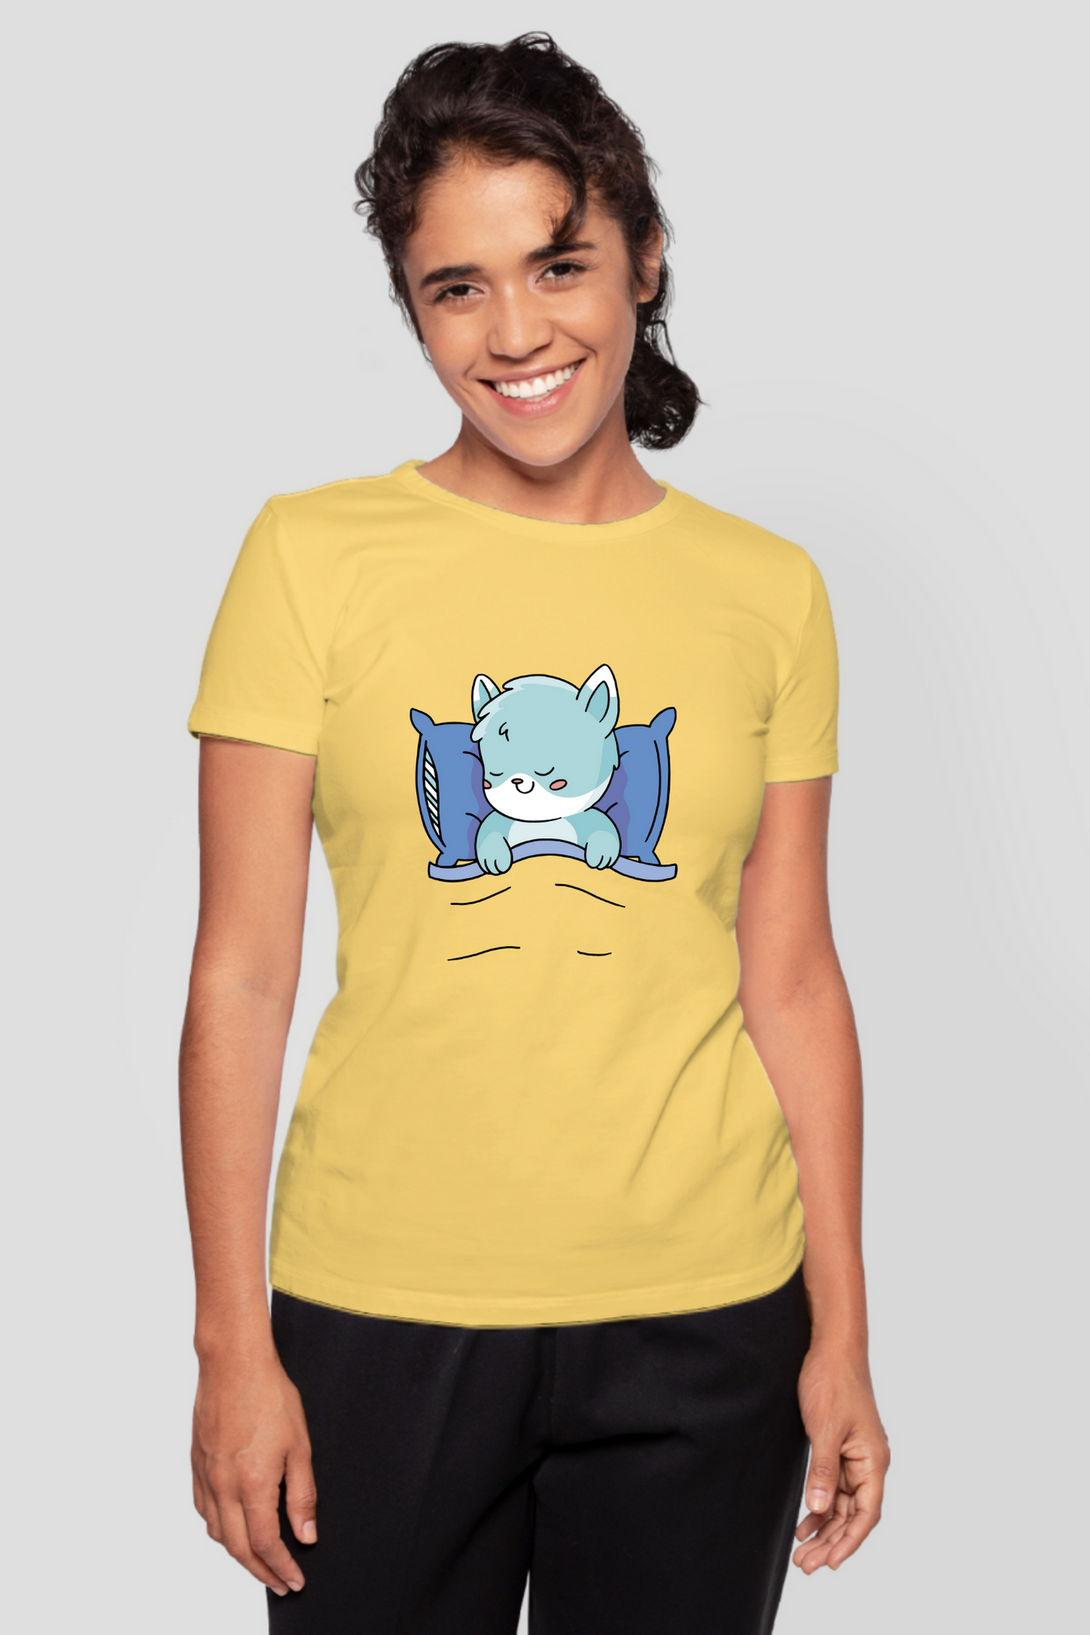 Cute Sleeping Cat Printed T-Shirt For Women - WowWaves - 10